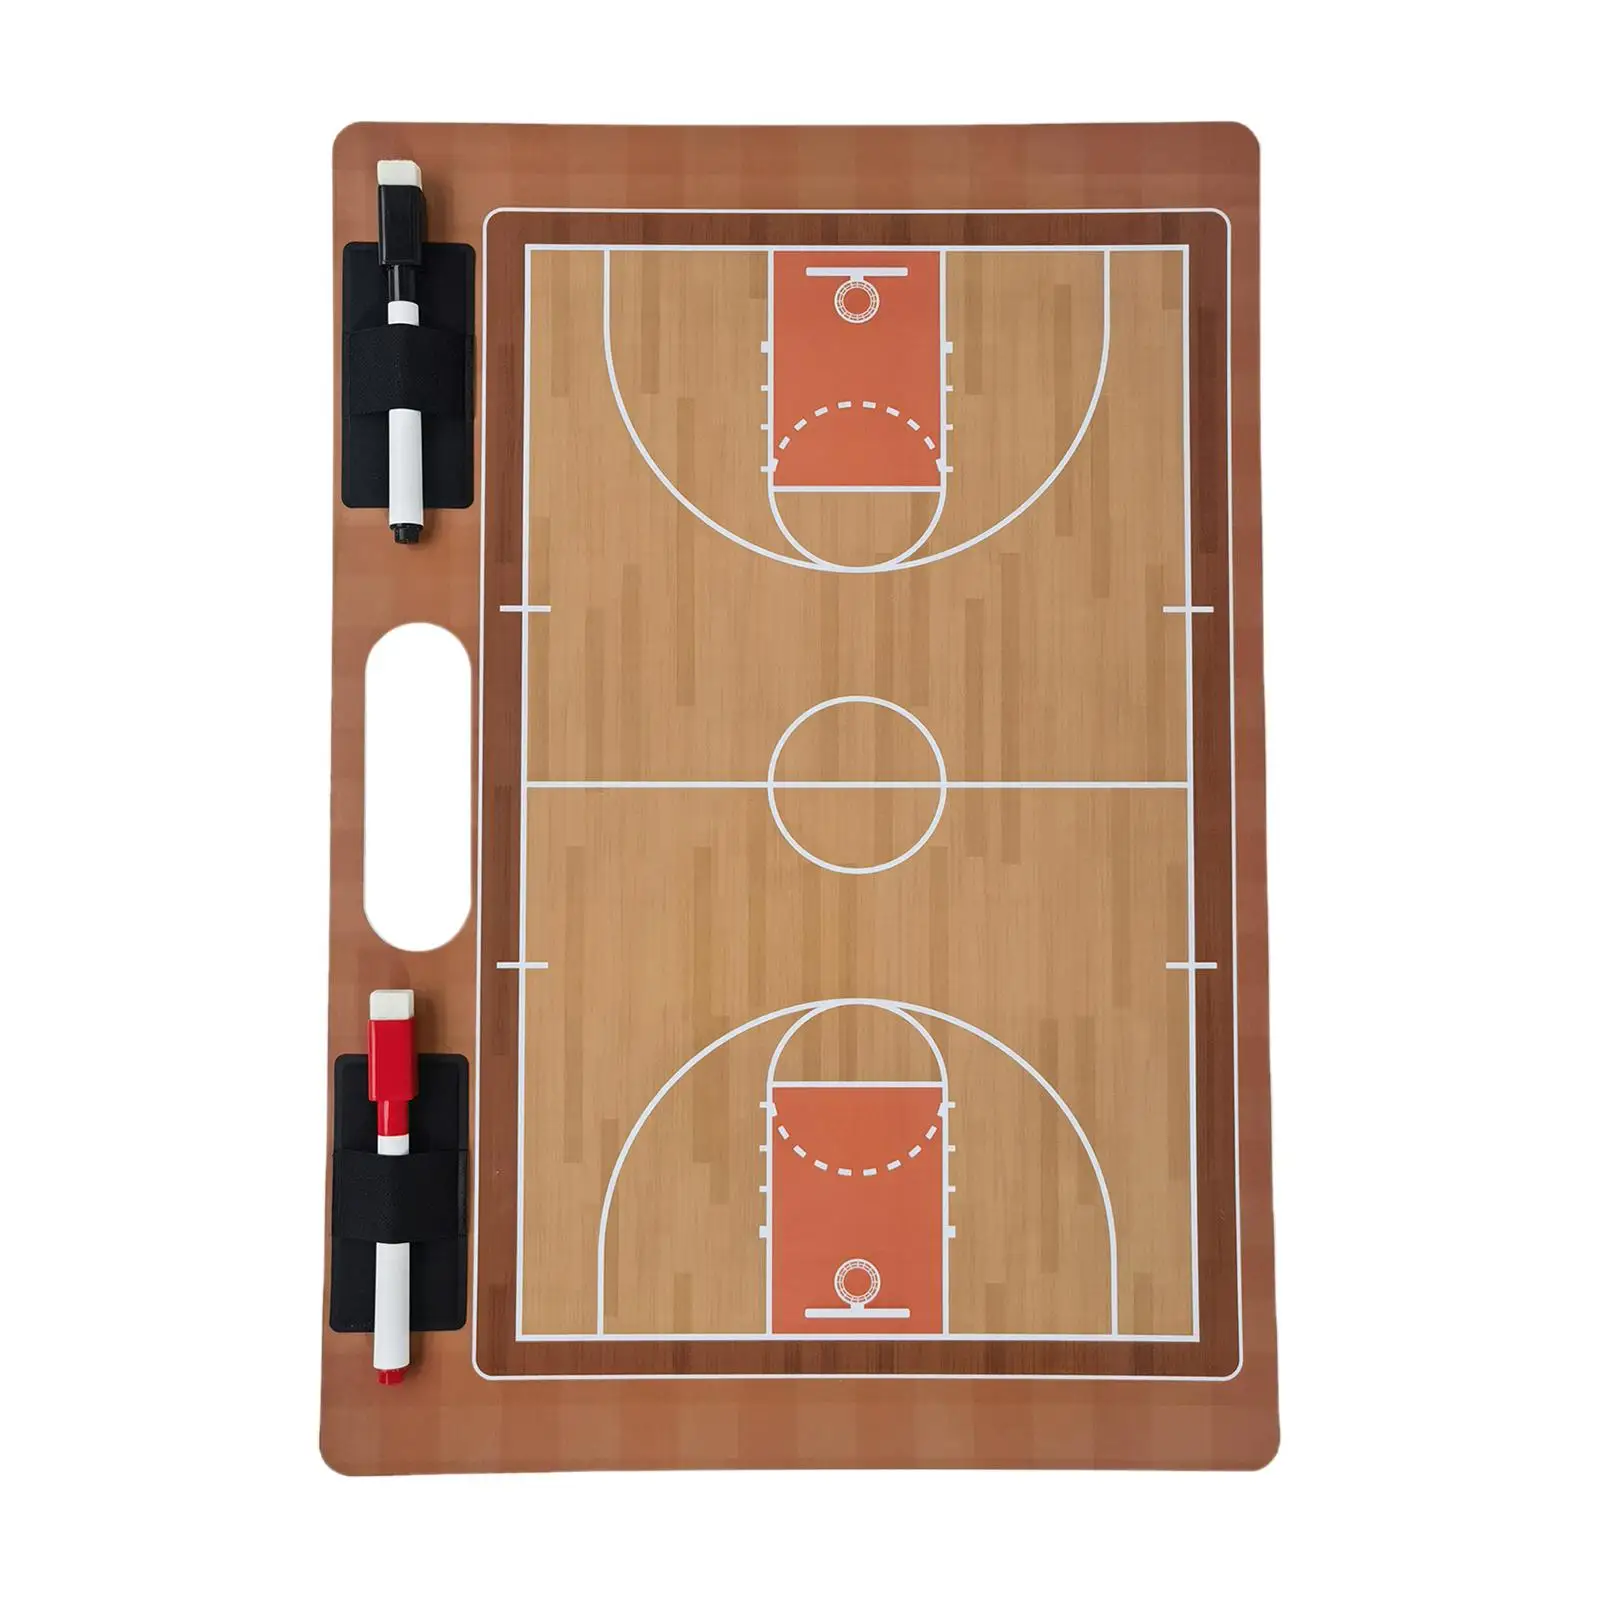 Clipboard Dry Erase Coaches Board Plays Teaching Basketball Coaching Board